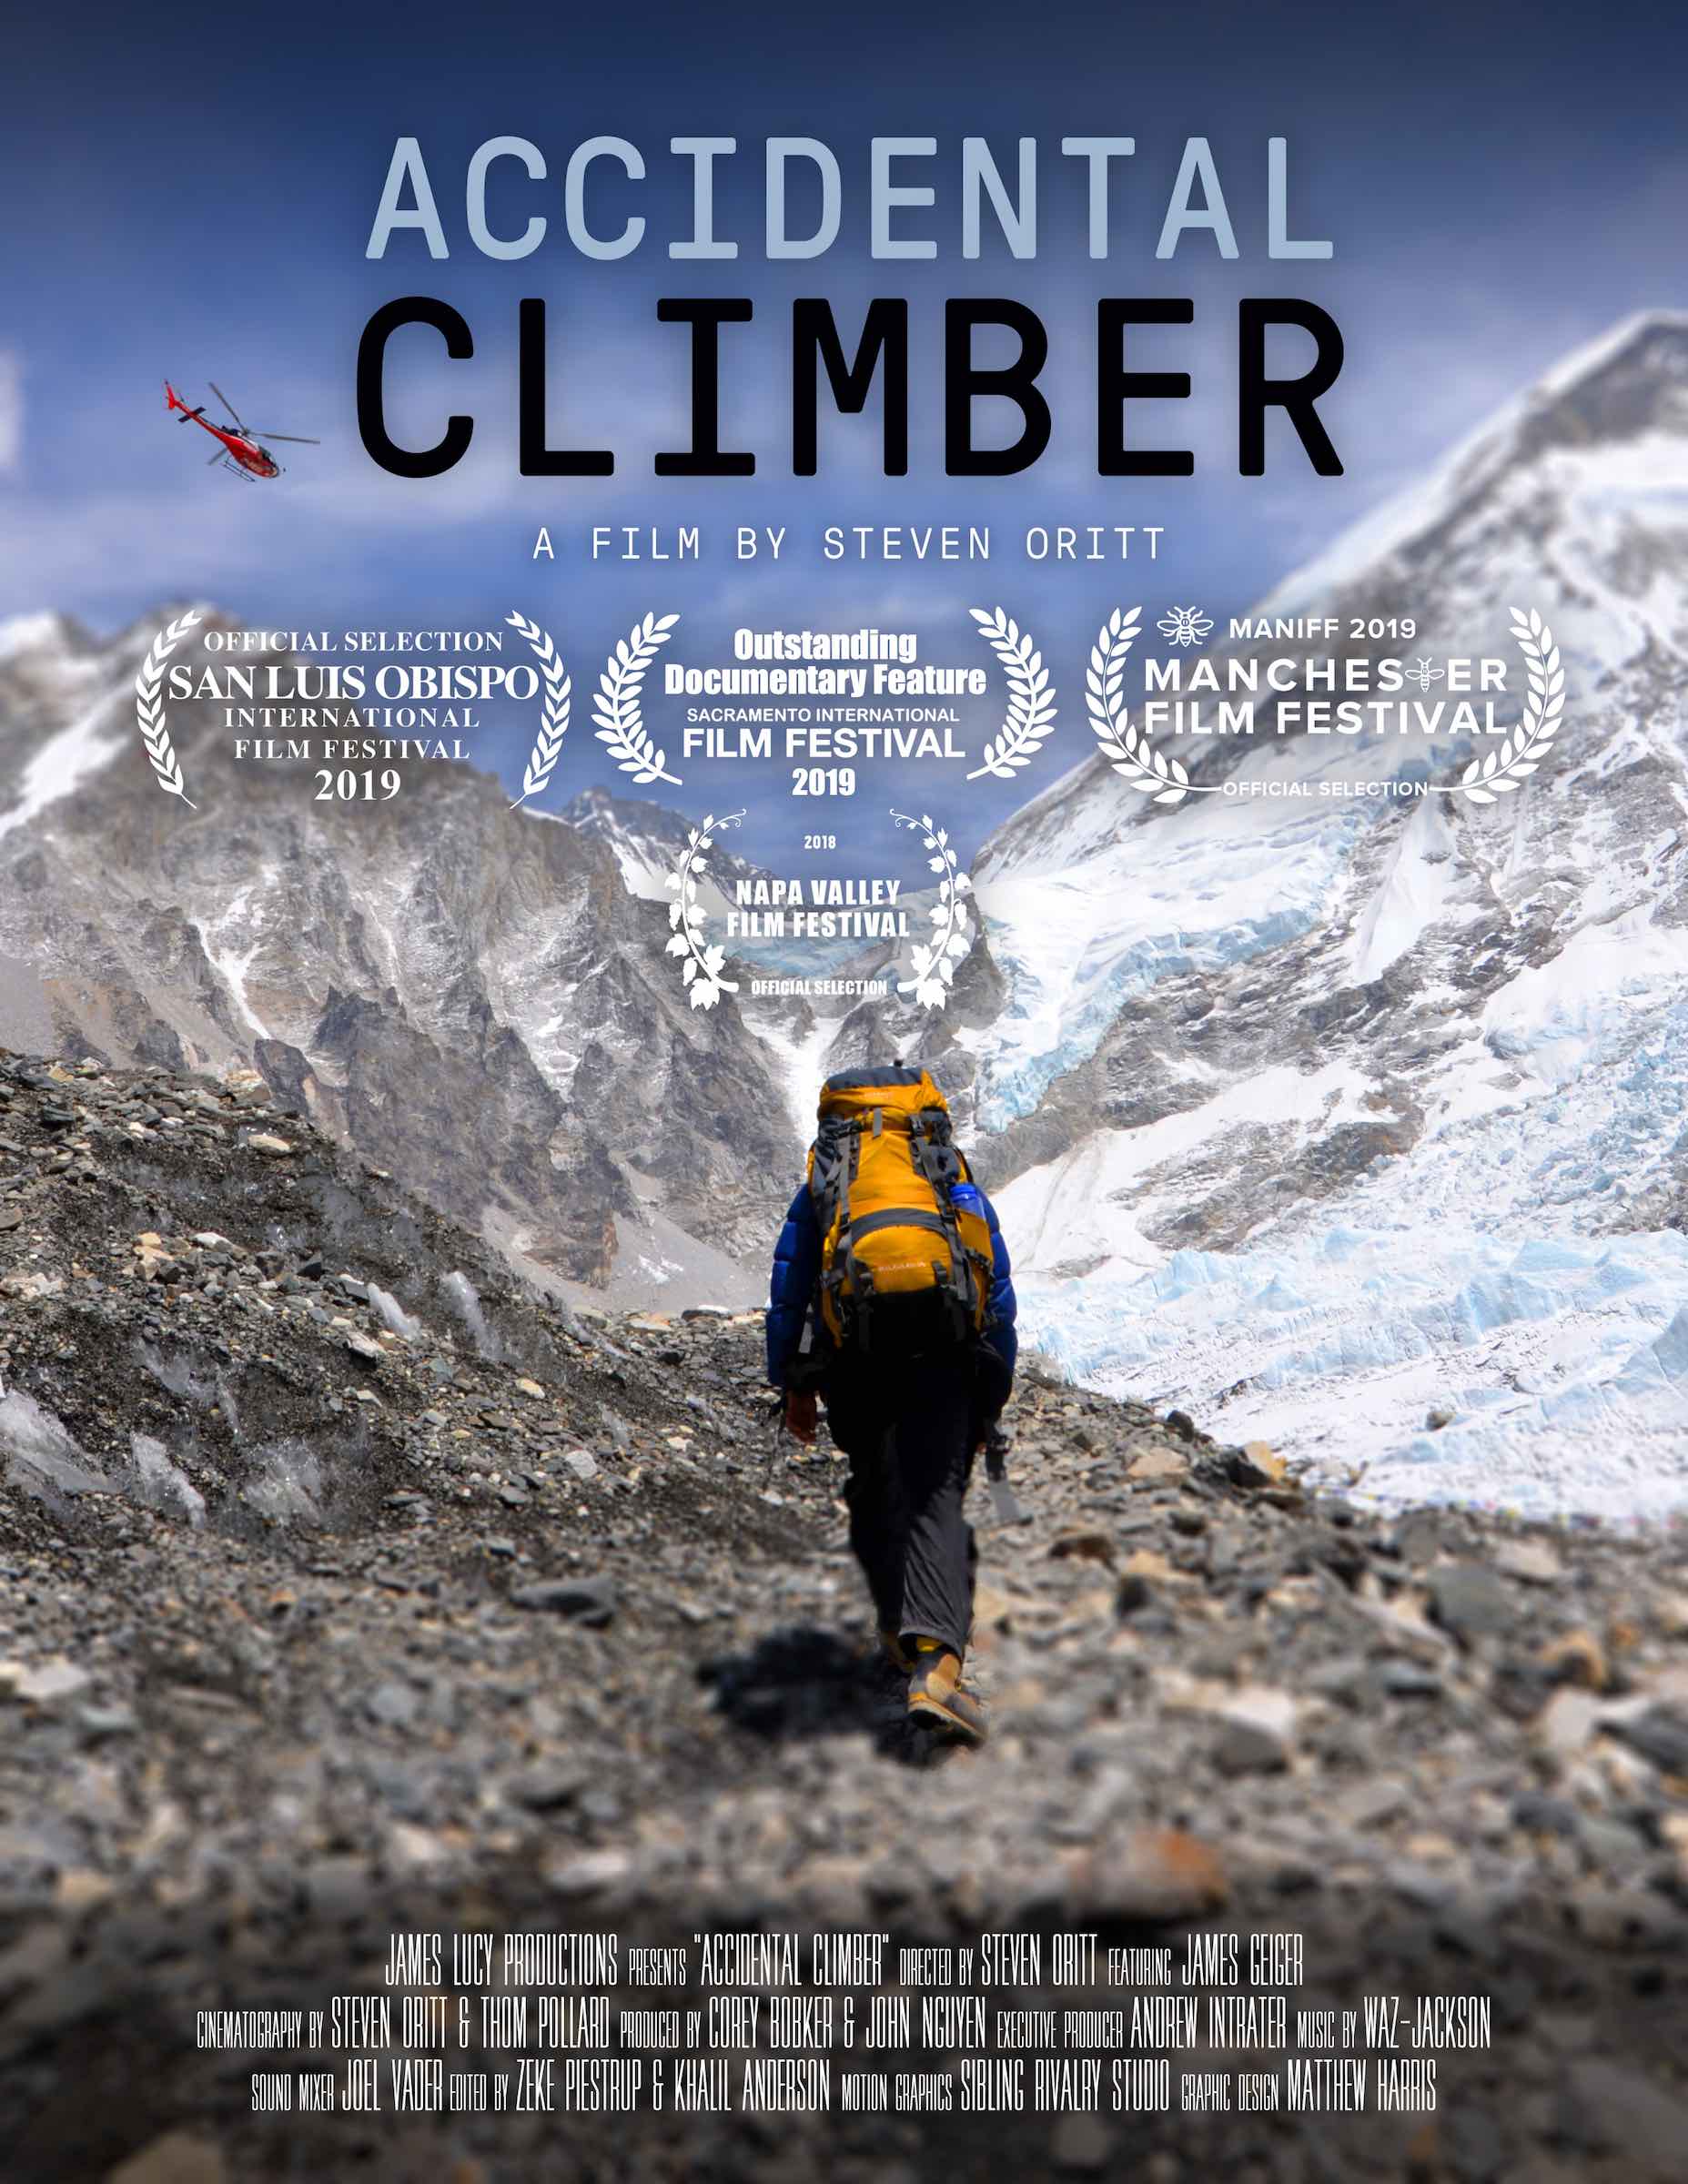 We highlight Steven Oritt's documentary 'Accidental Climber' in advance of its Australian premiere at the Melbourne Documentary Film Festival.